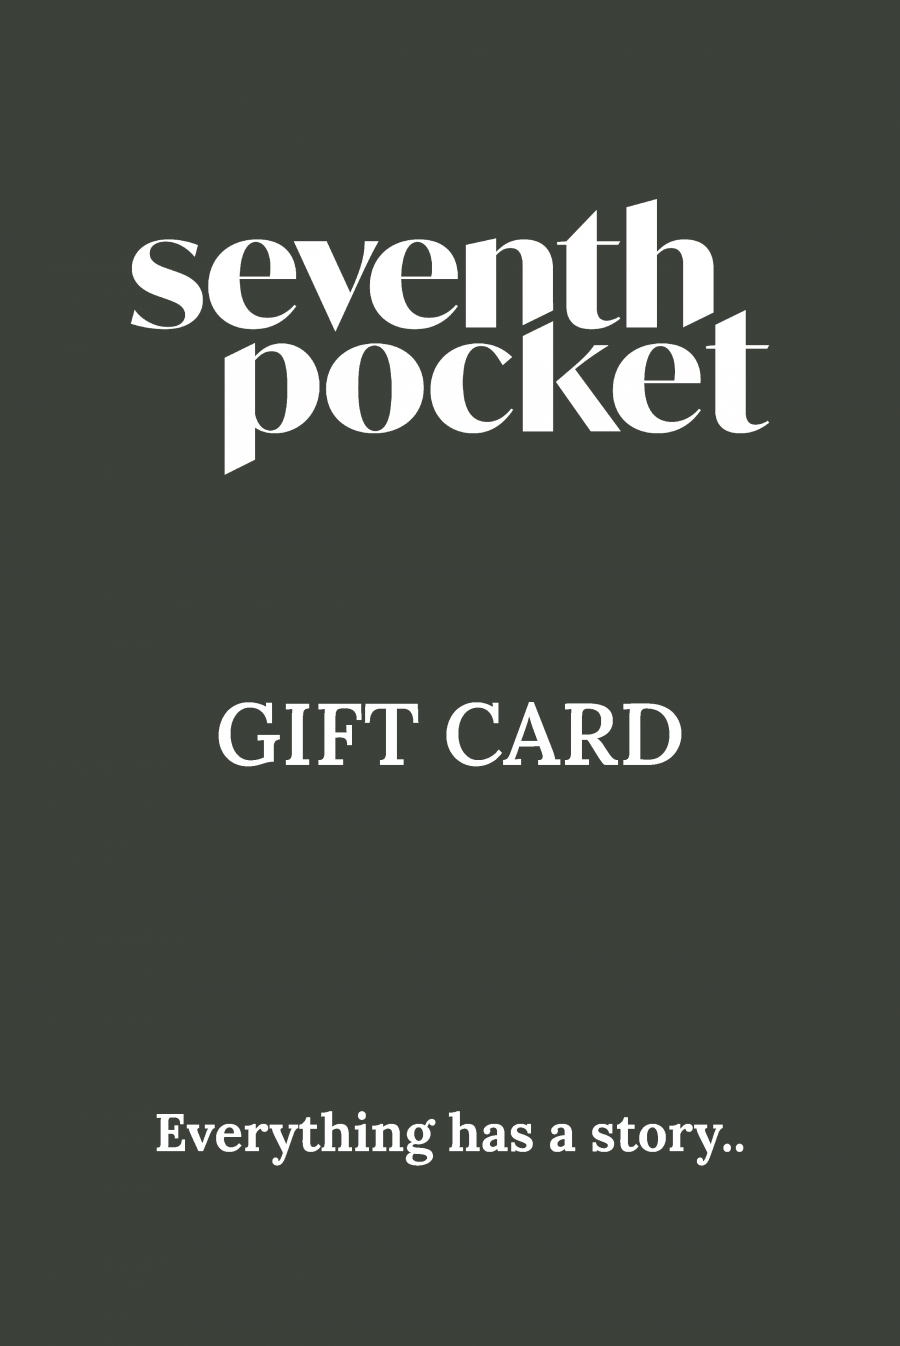 Seventh Pocket gift card